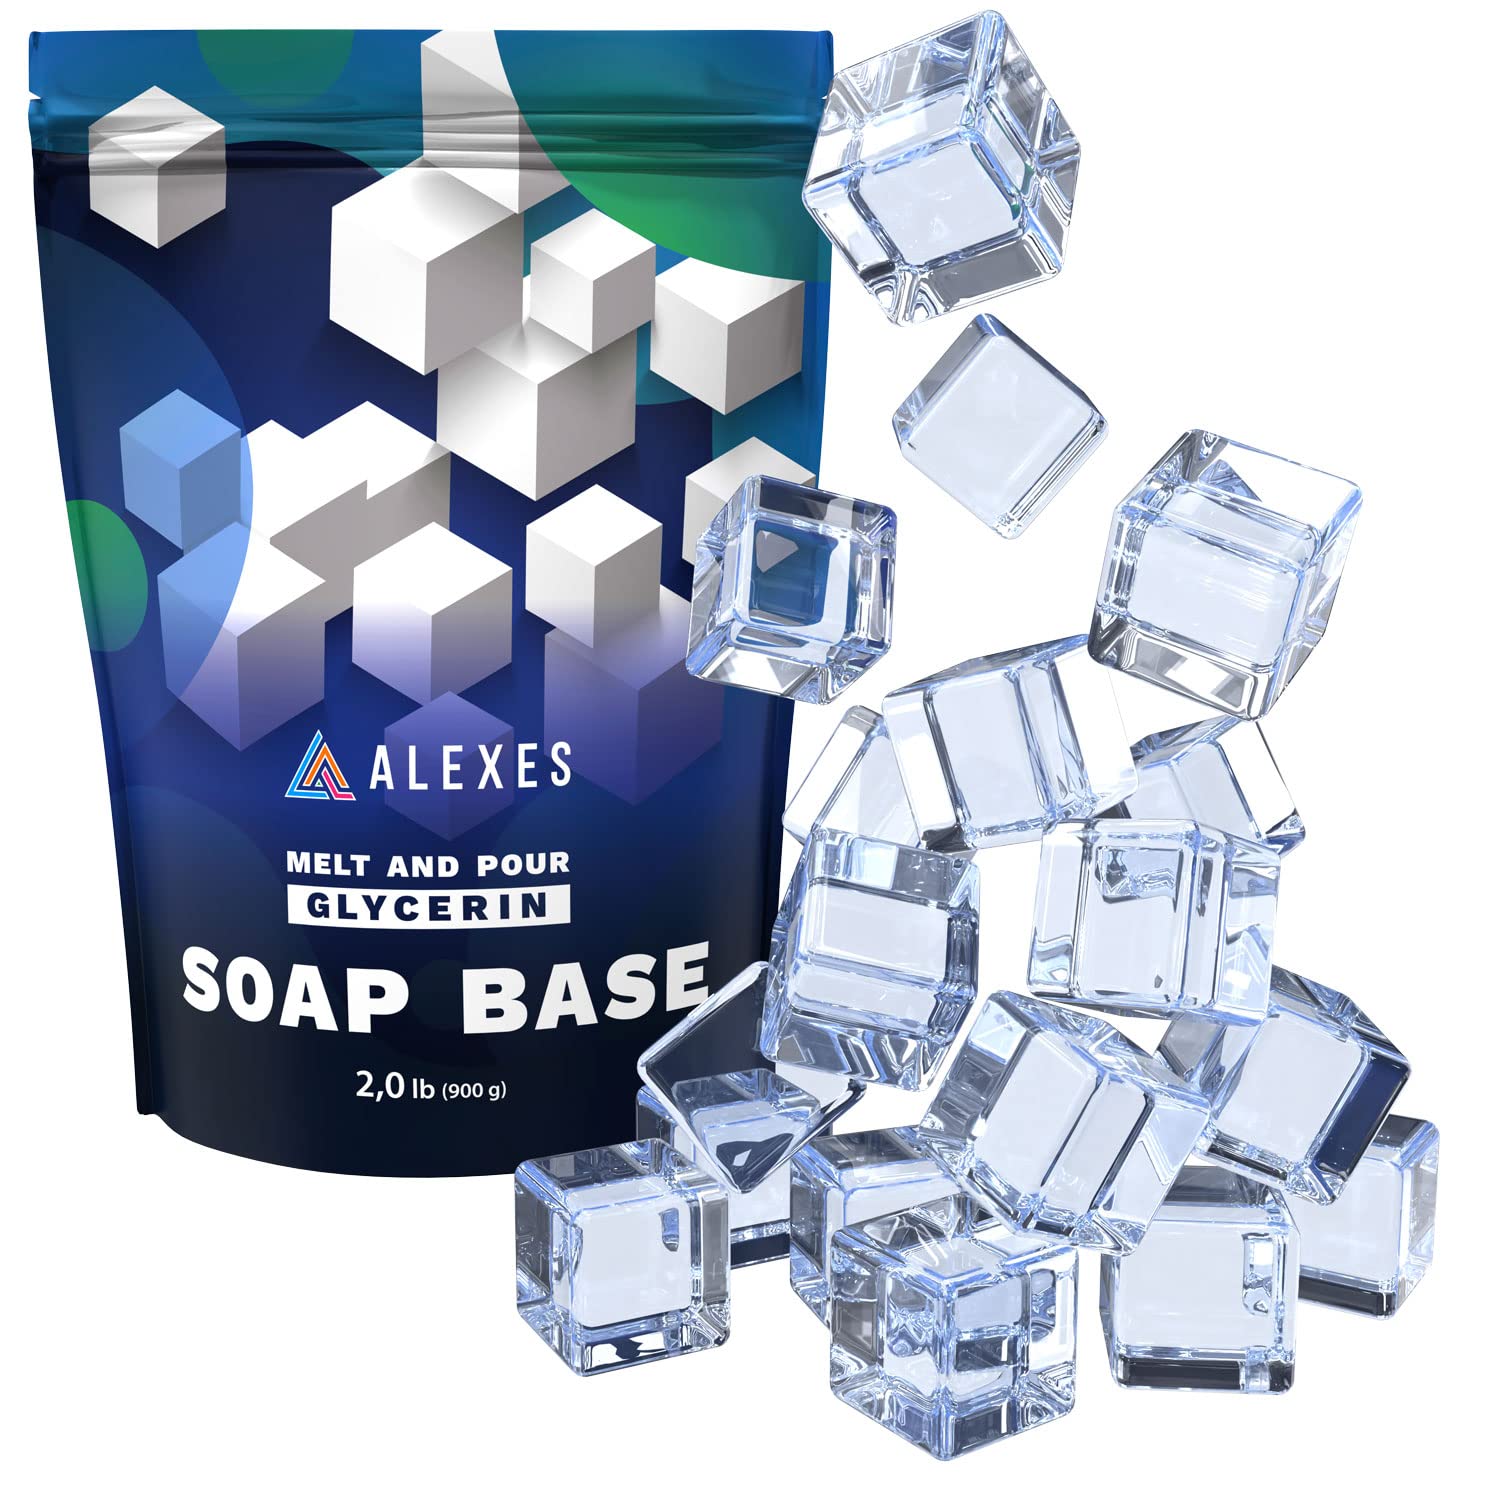 ALEXES Glycerin Melt and Pour Soap Base - Soap Base for Soap Making Melt  and Pour - Organic Clear Glycerin Soap Base - Soap Making Supp